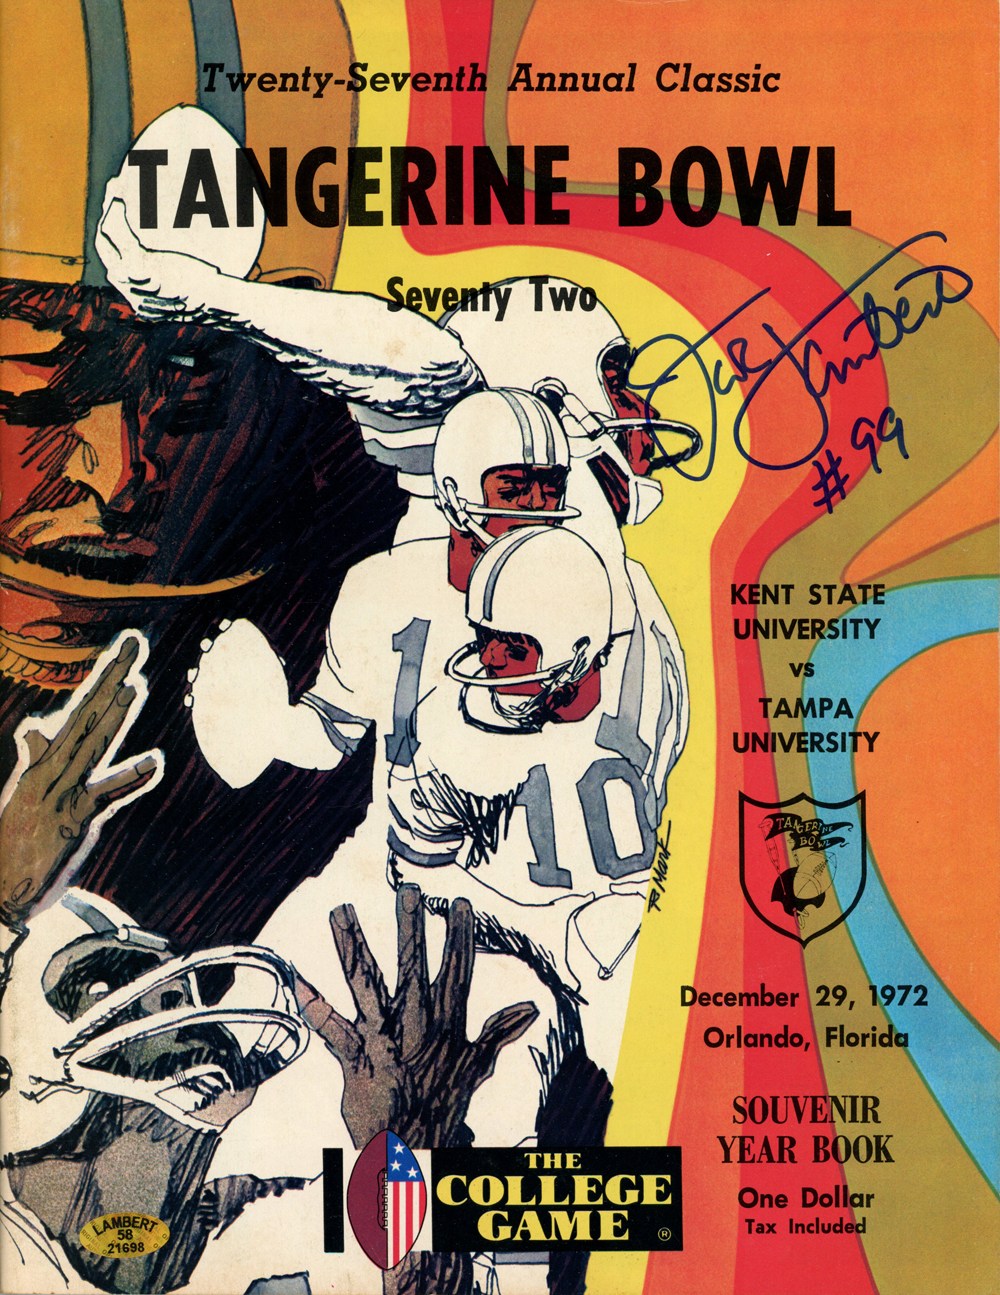 Jack Lambert Autographed/Signed 1972 Tangerine Bowl Program Beckett